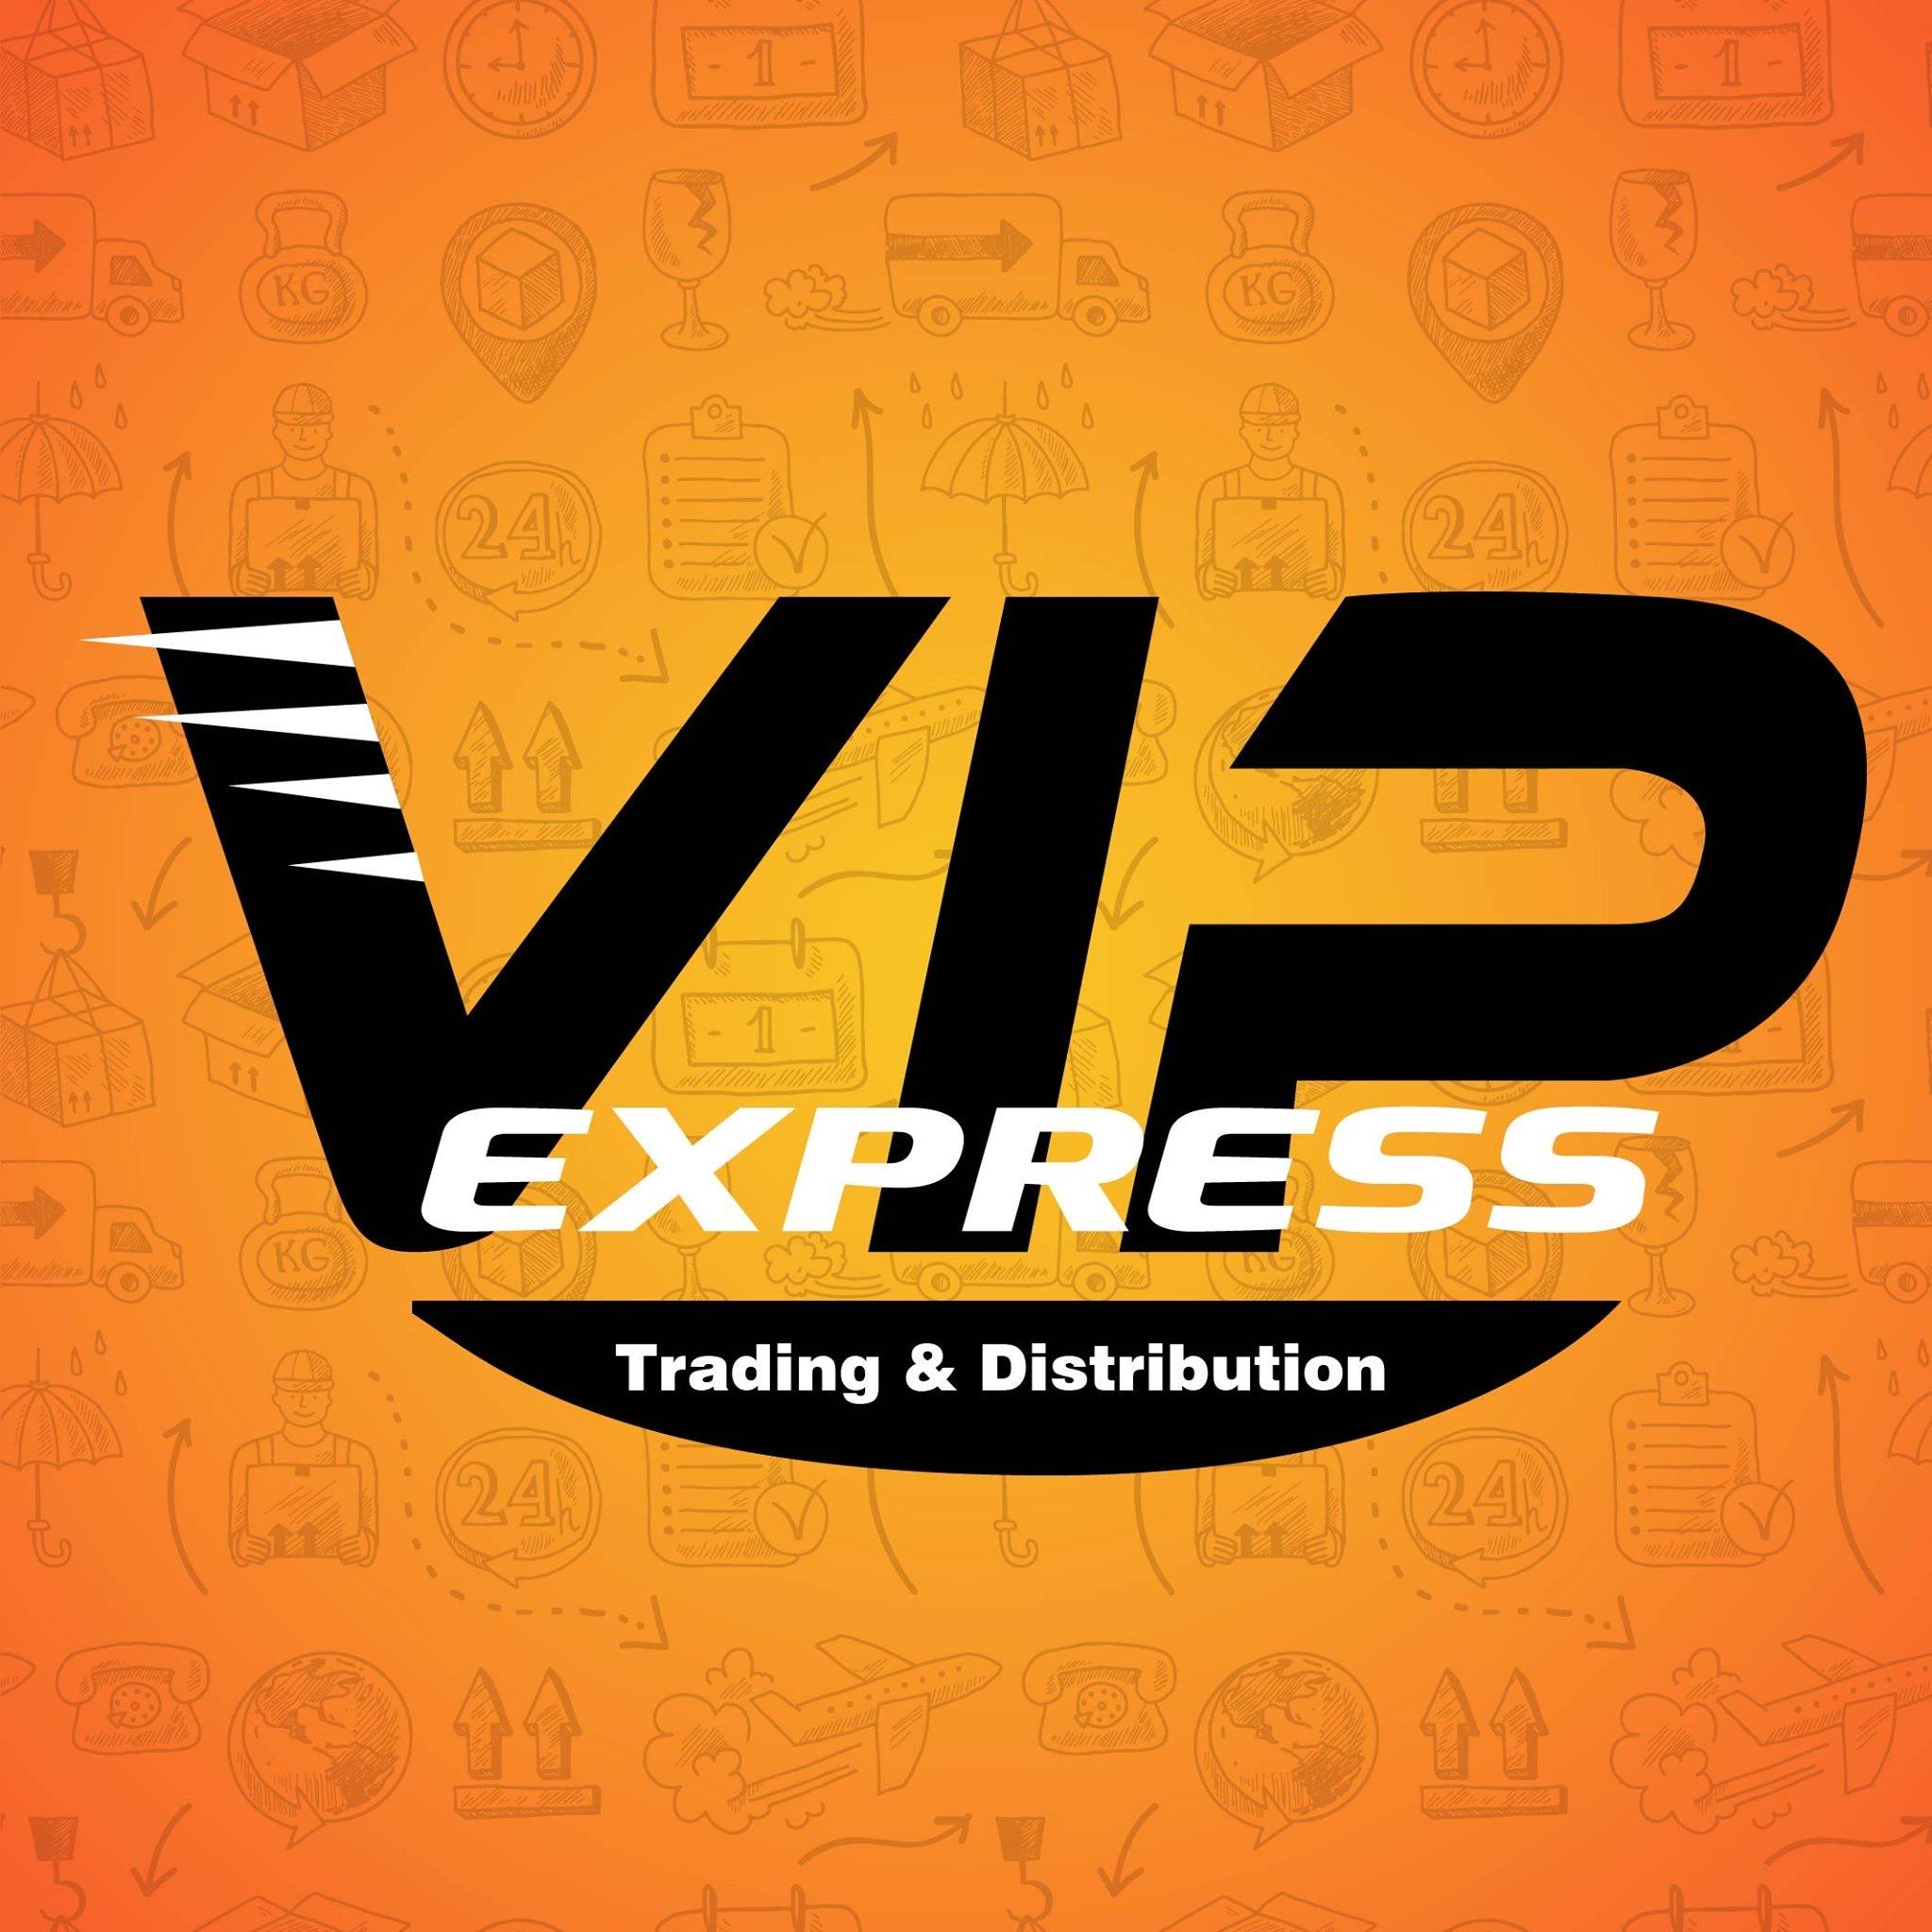 VIP Express Trading & Distribution